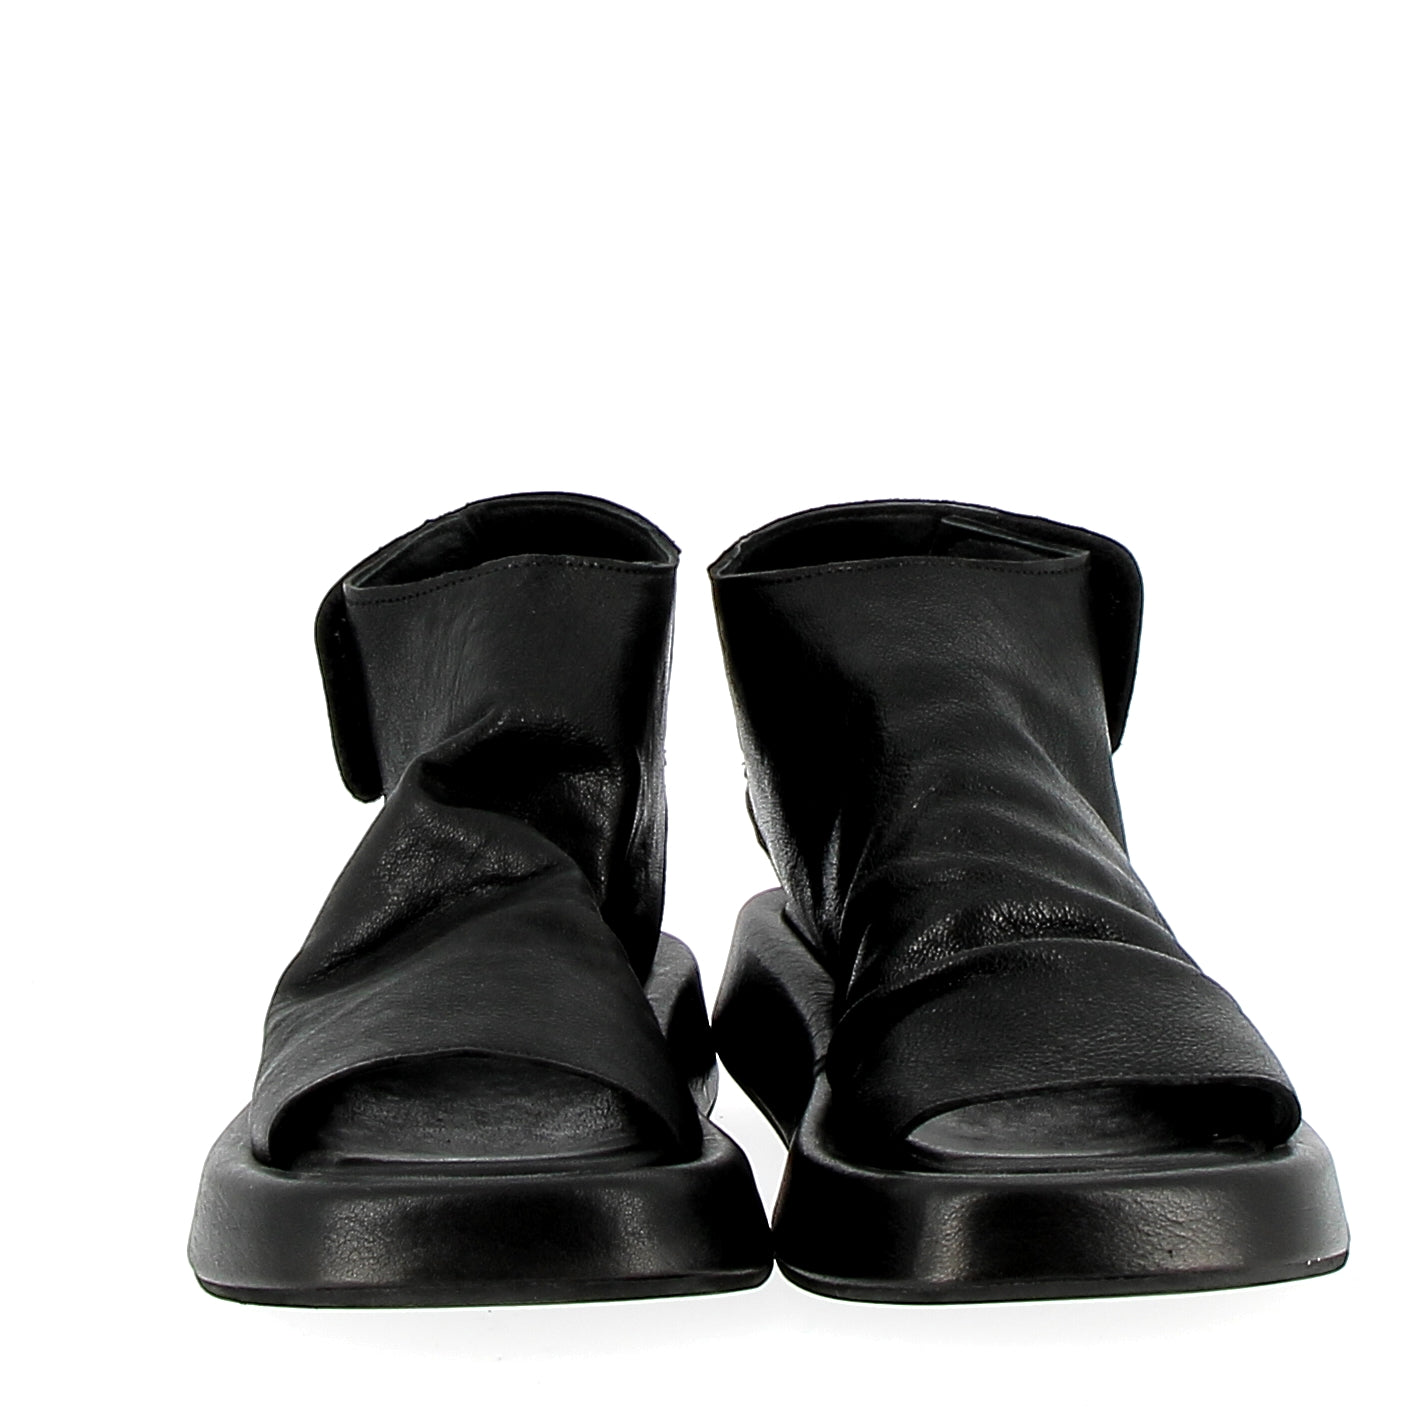 Black leather sandal with back strap